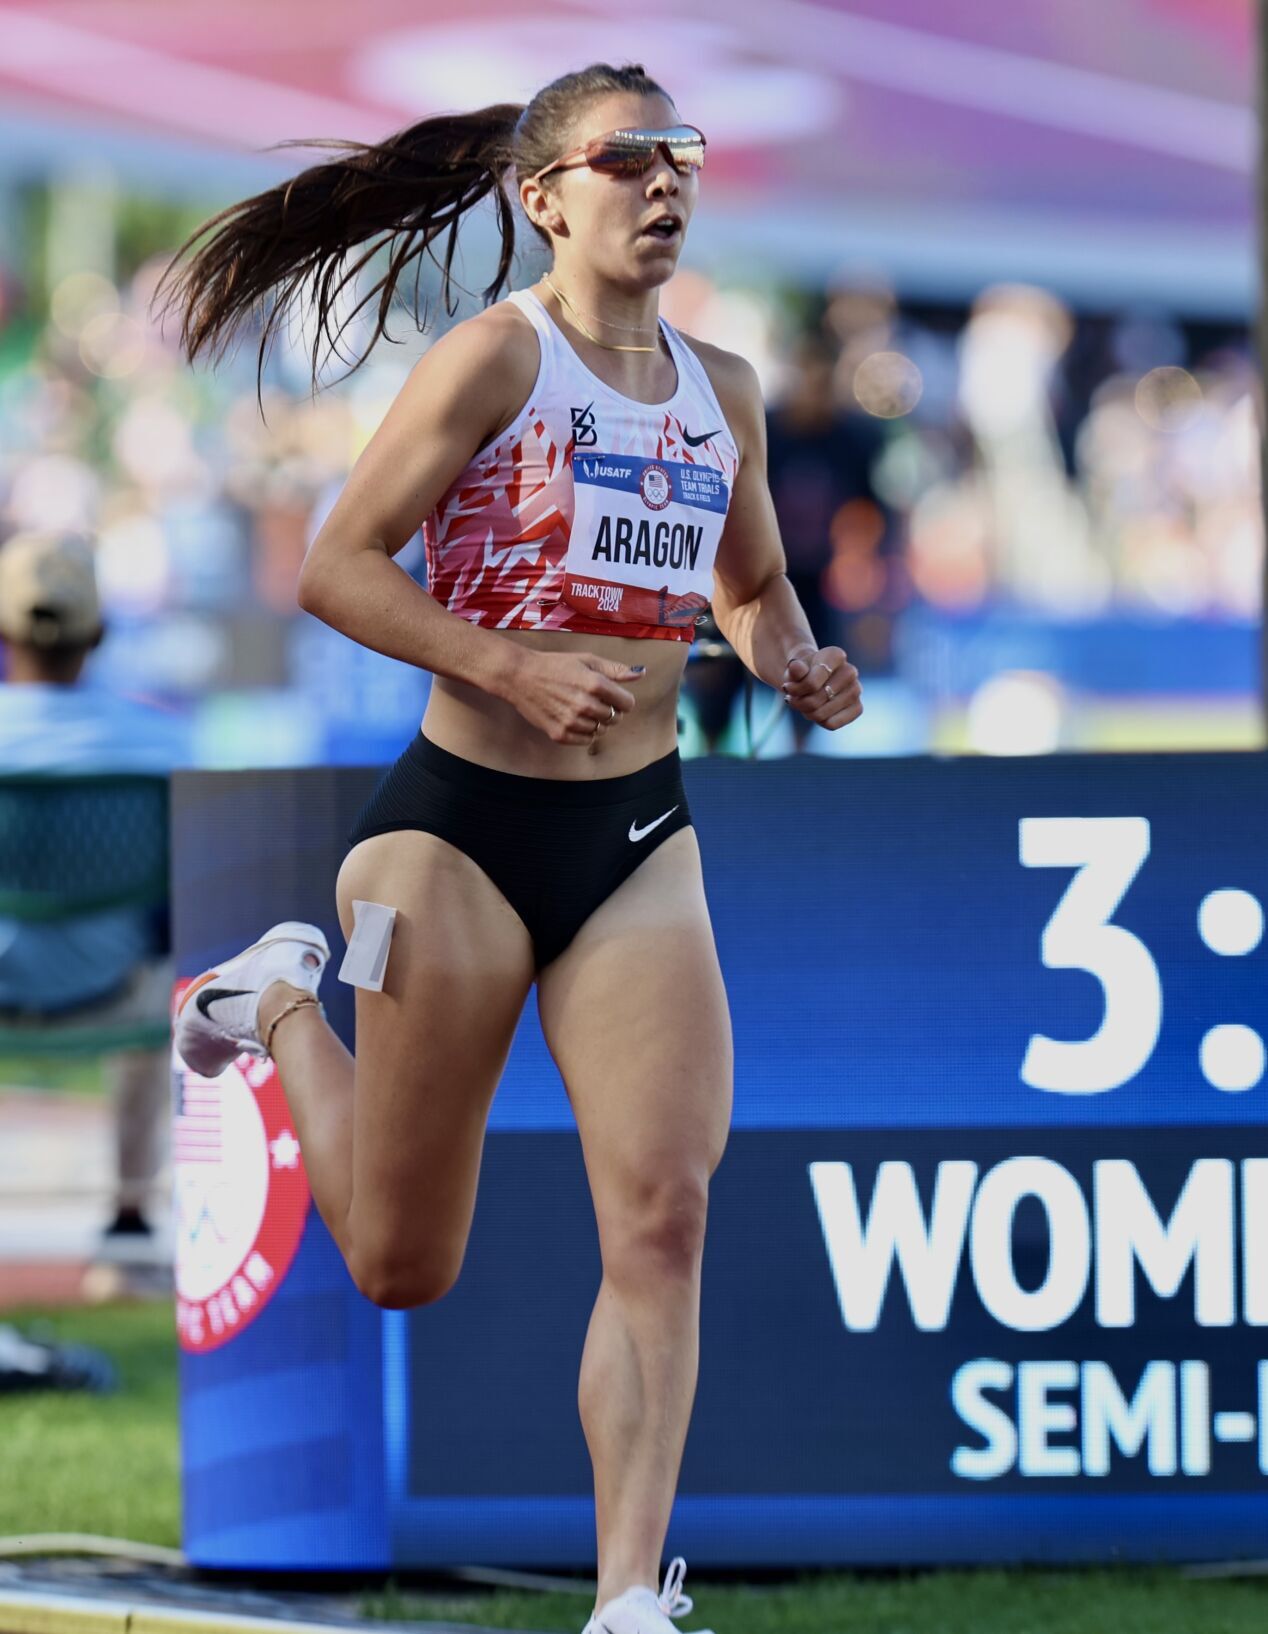 Christina Aragon advances to Olympic Trials 1